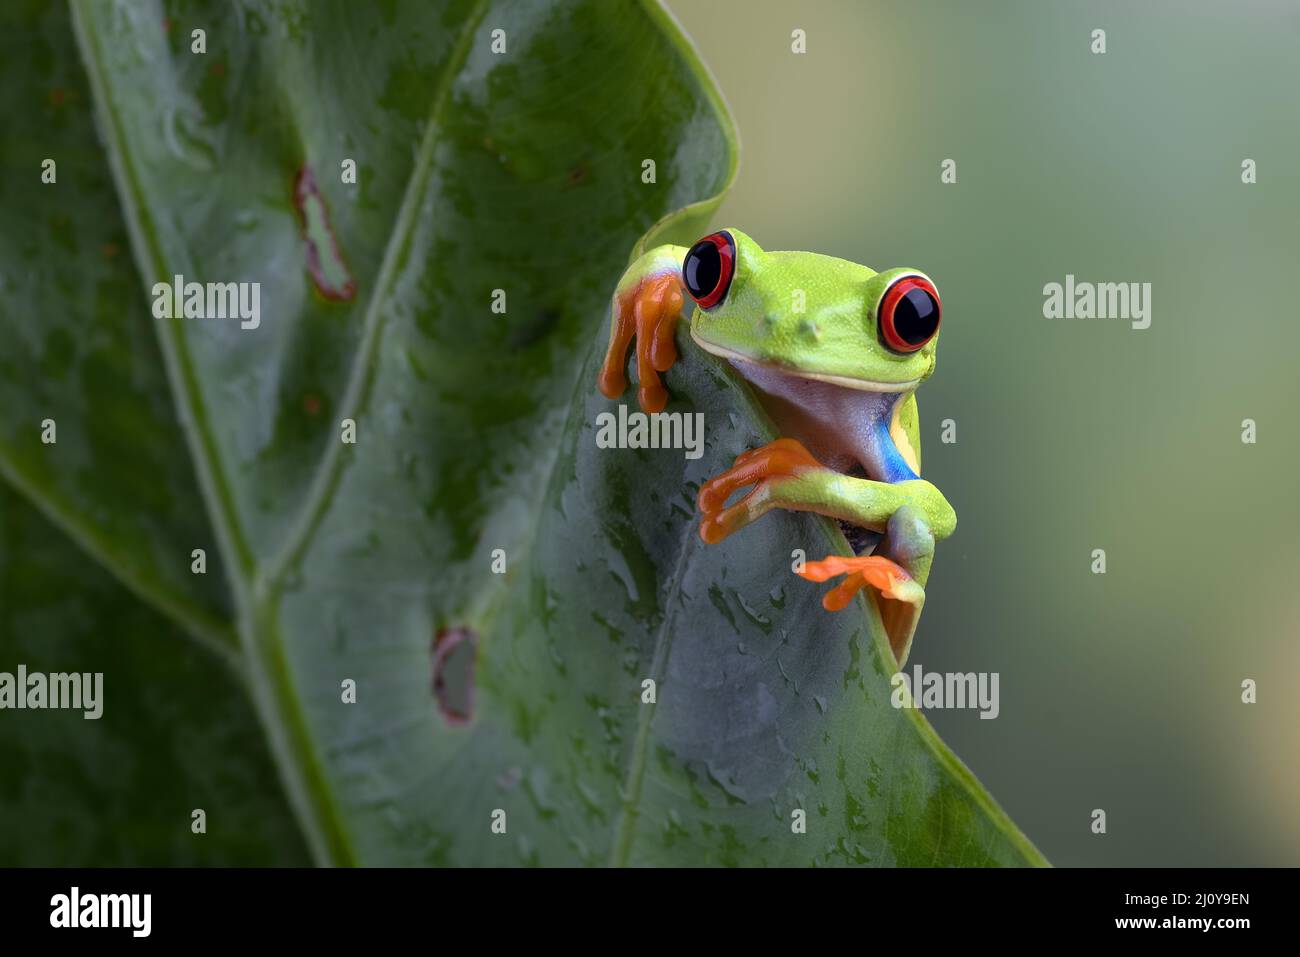 Red eyed tree frog sitting on leaf Stock Photo